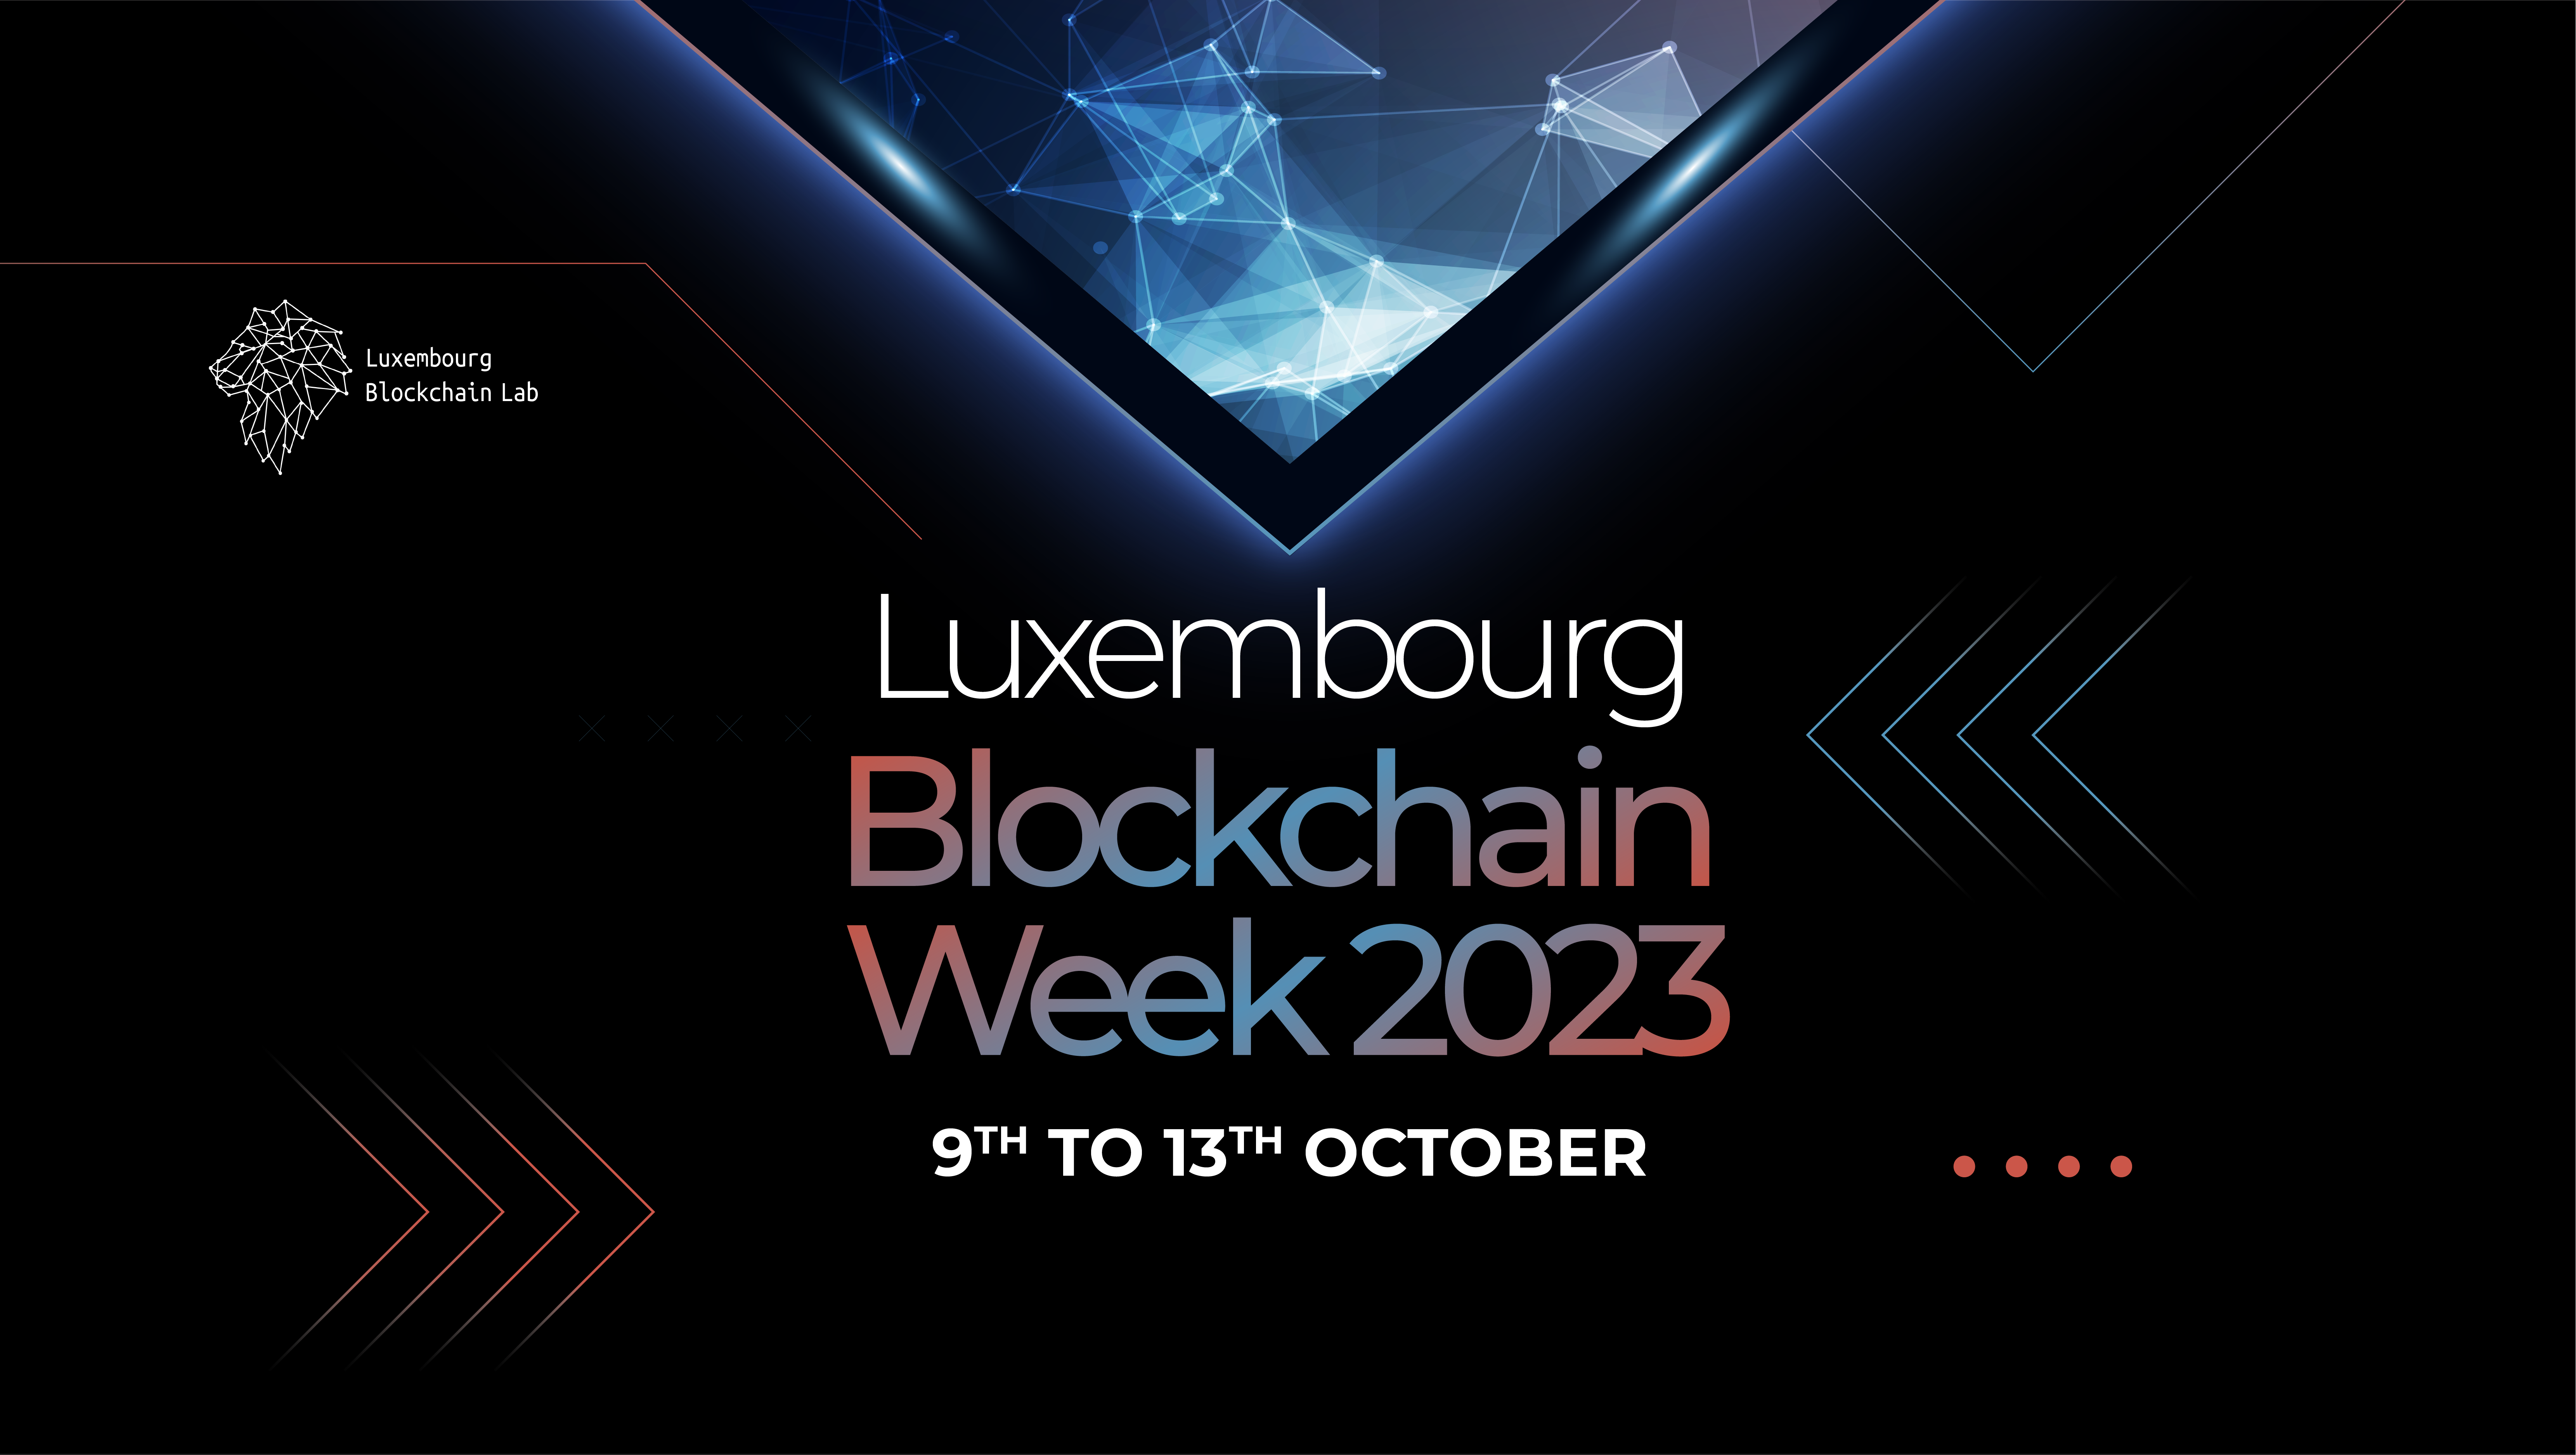 Luxembourg Blockchain Lab